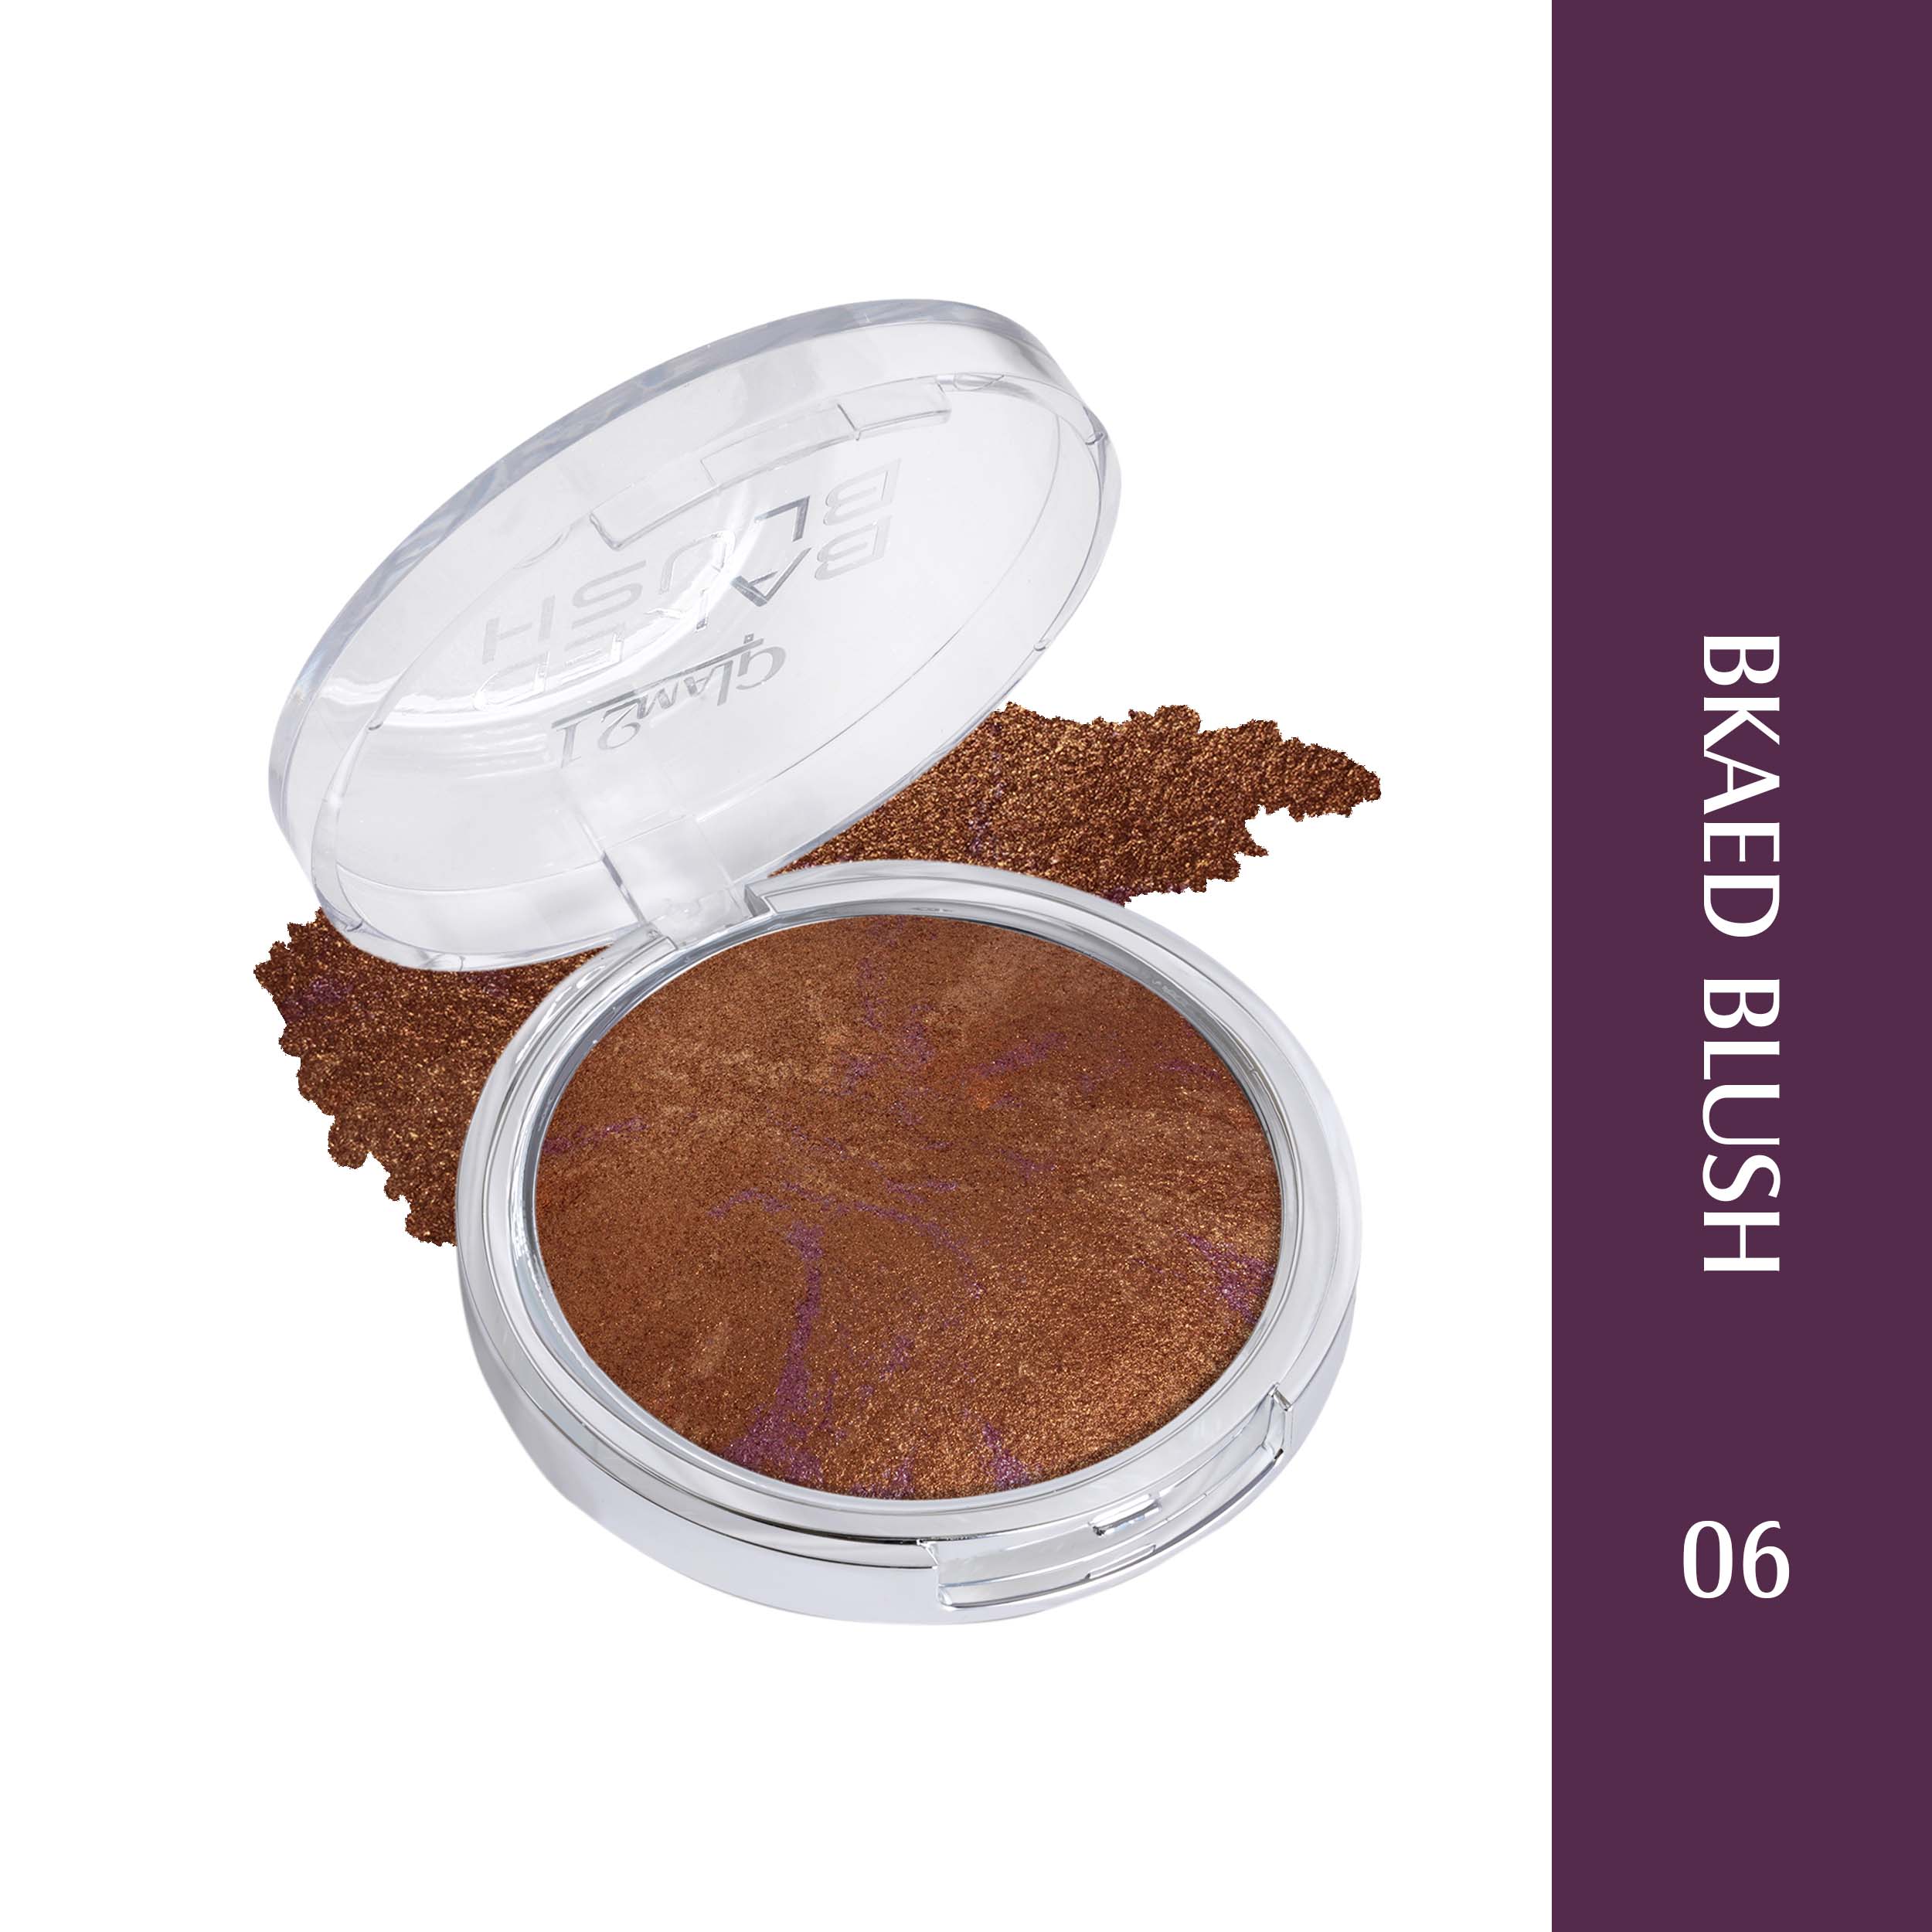 Glam21 Baked Blush Highly Pigmented Formula, Long-Lasting, Illuminating Texture, 6g (Shade-06)